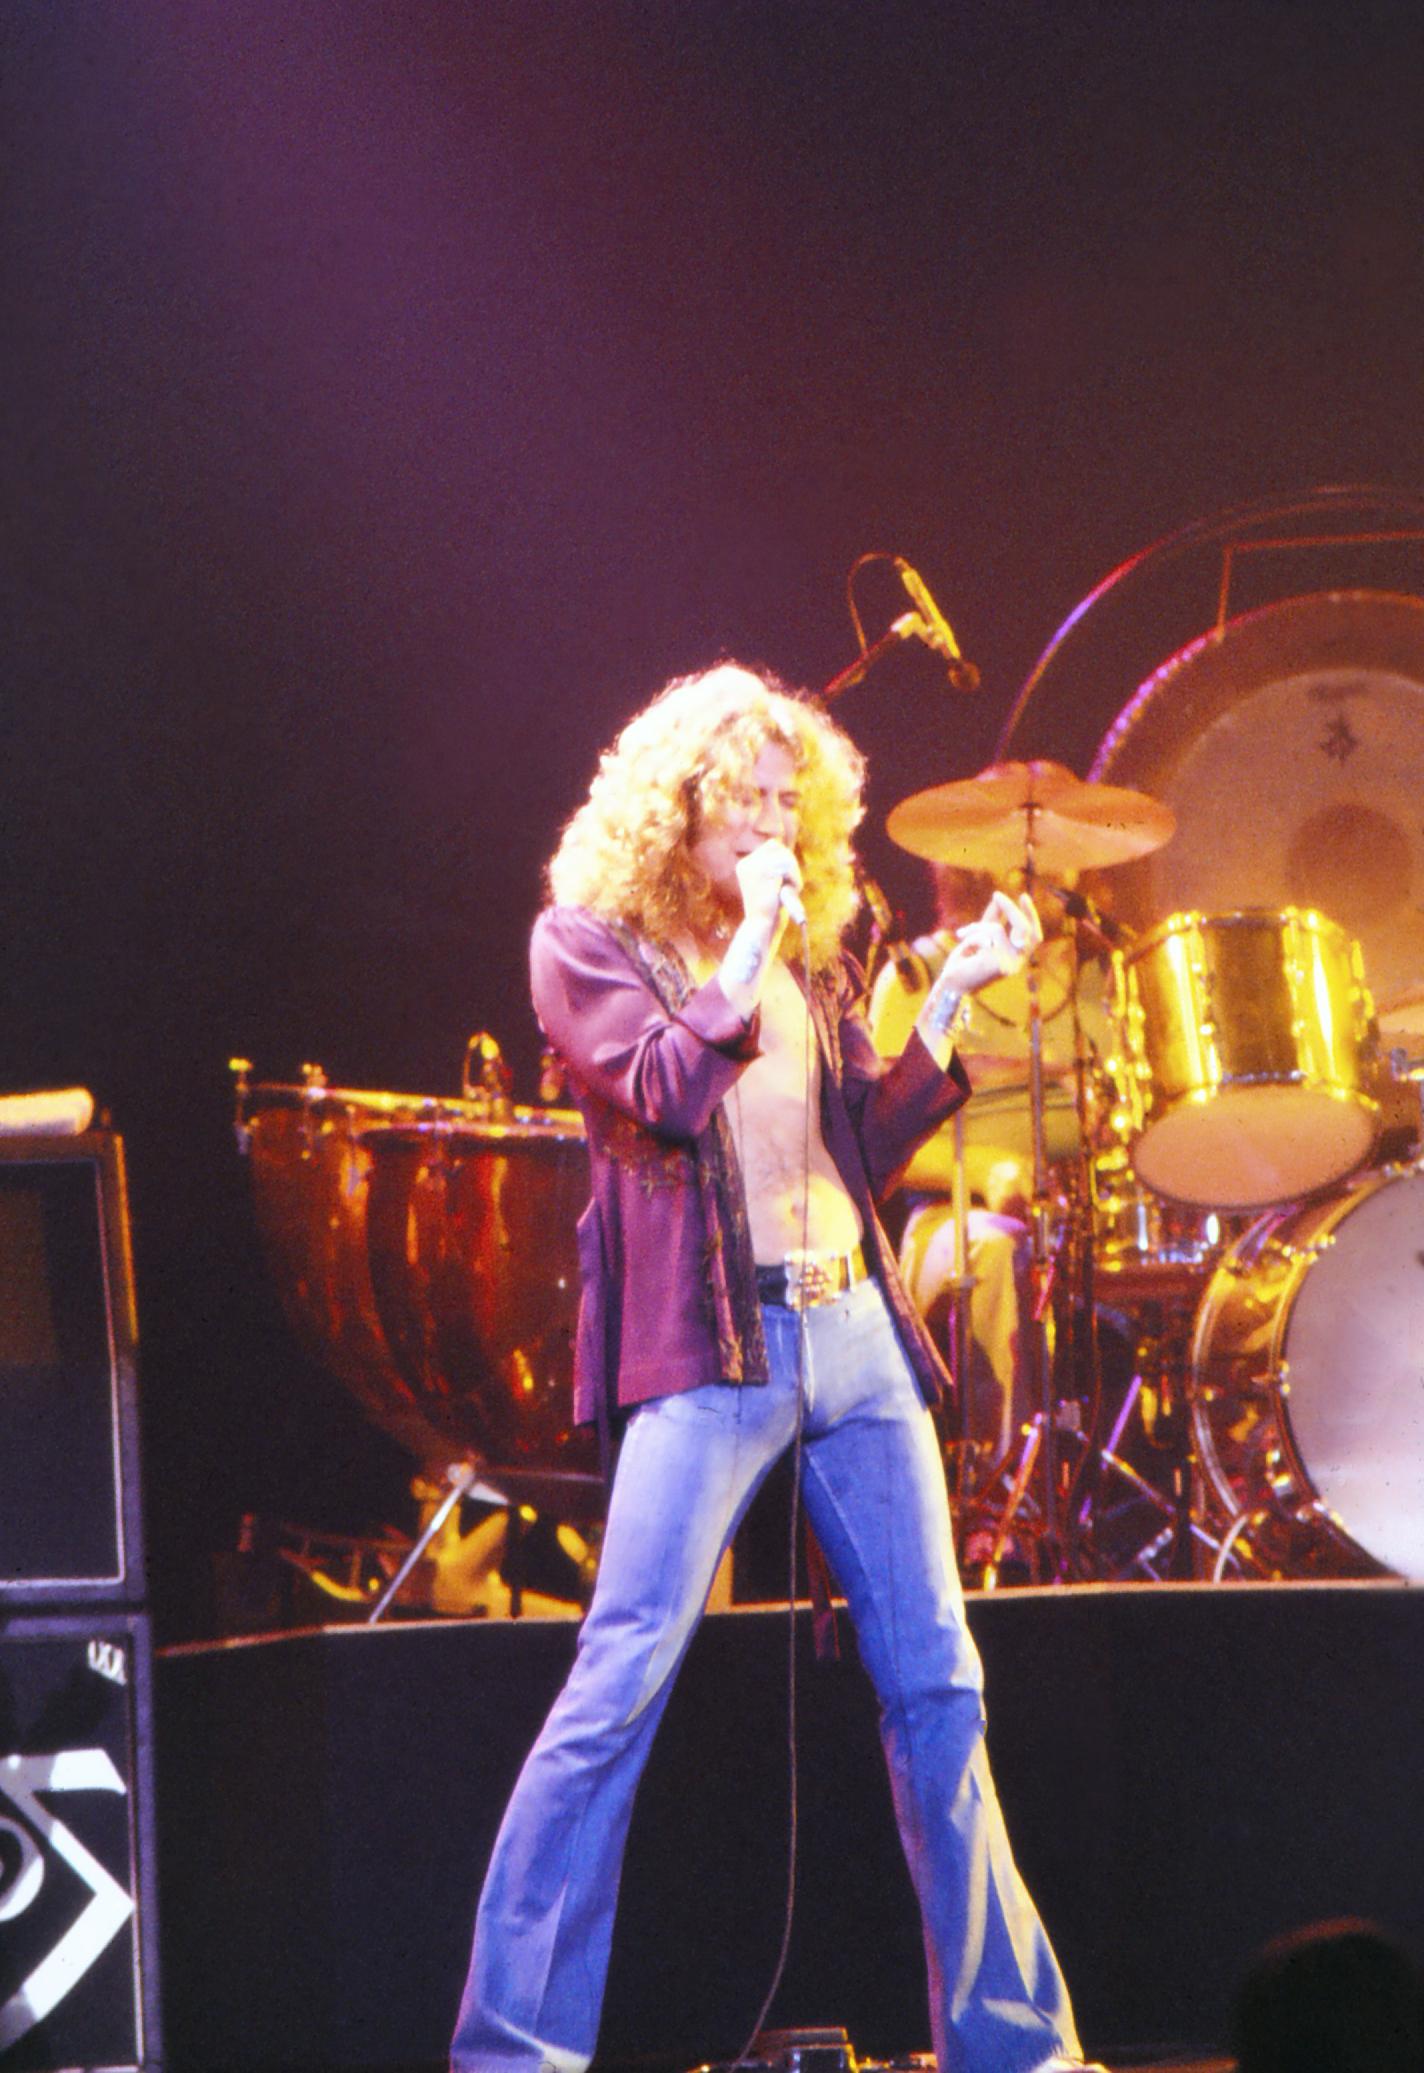 David Woo Portrait Photograph - Robert Plant of Led Zeppelin Singing on Stage Fine Art Print